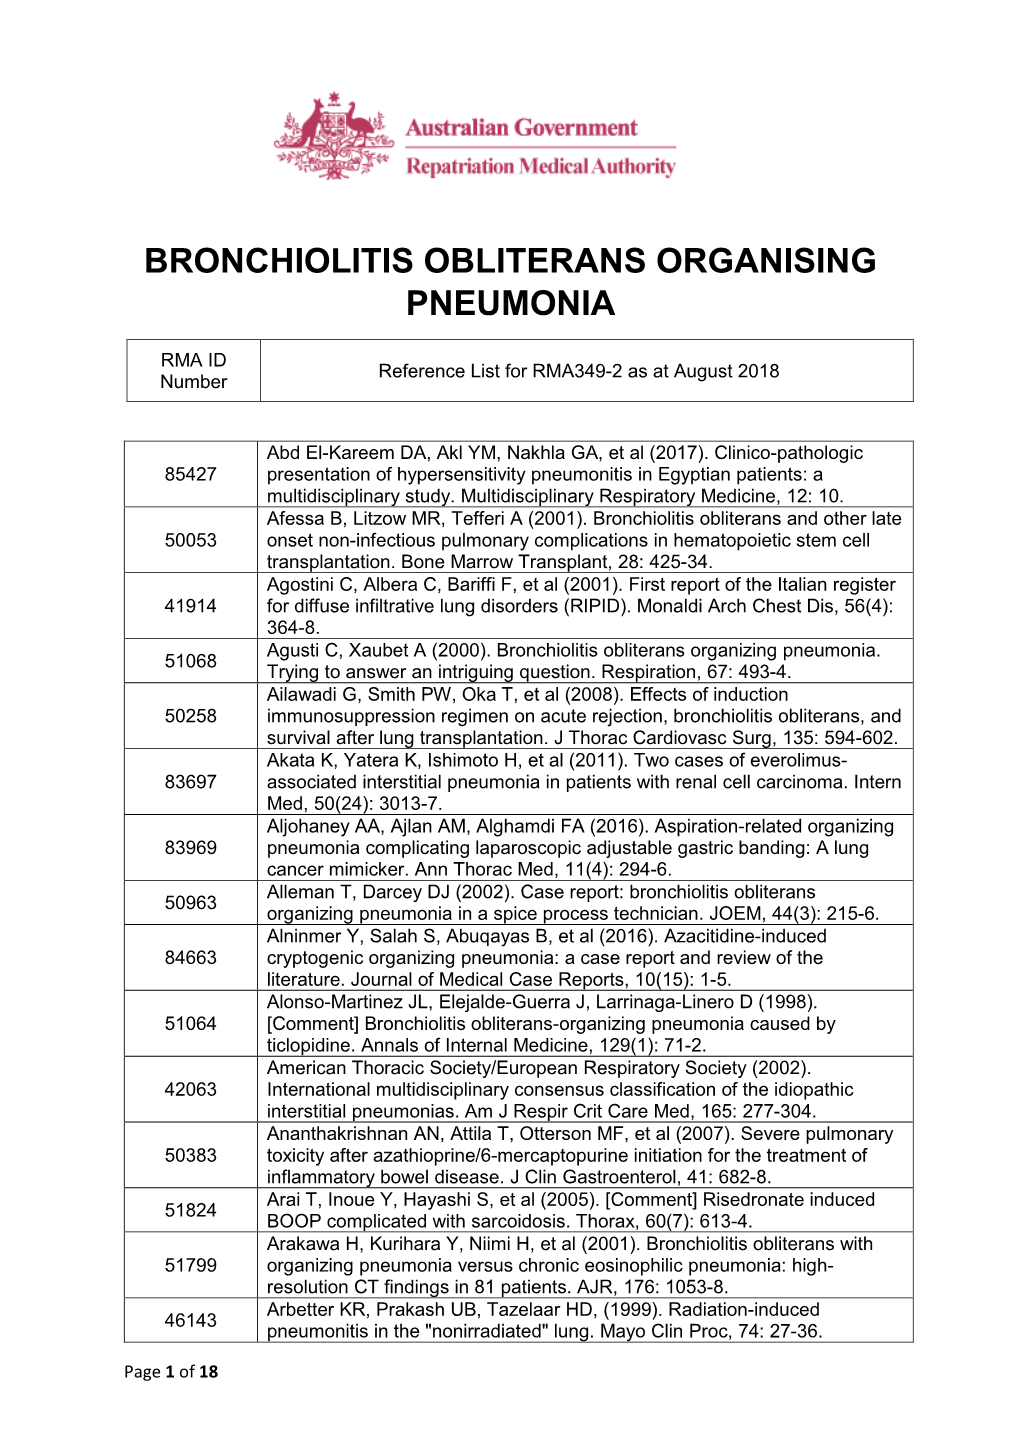 Reference List Concering Bronchiolitis Obliterans Organising Pneumonia